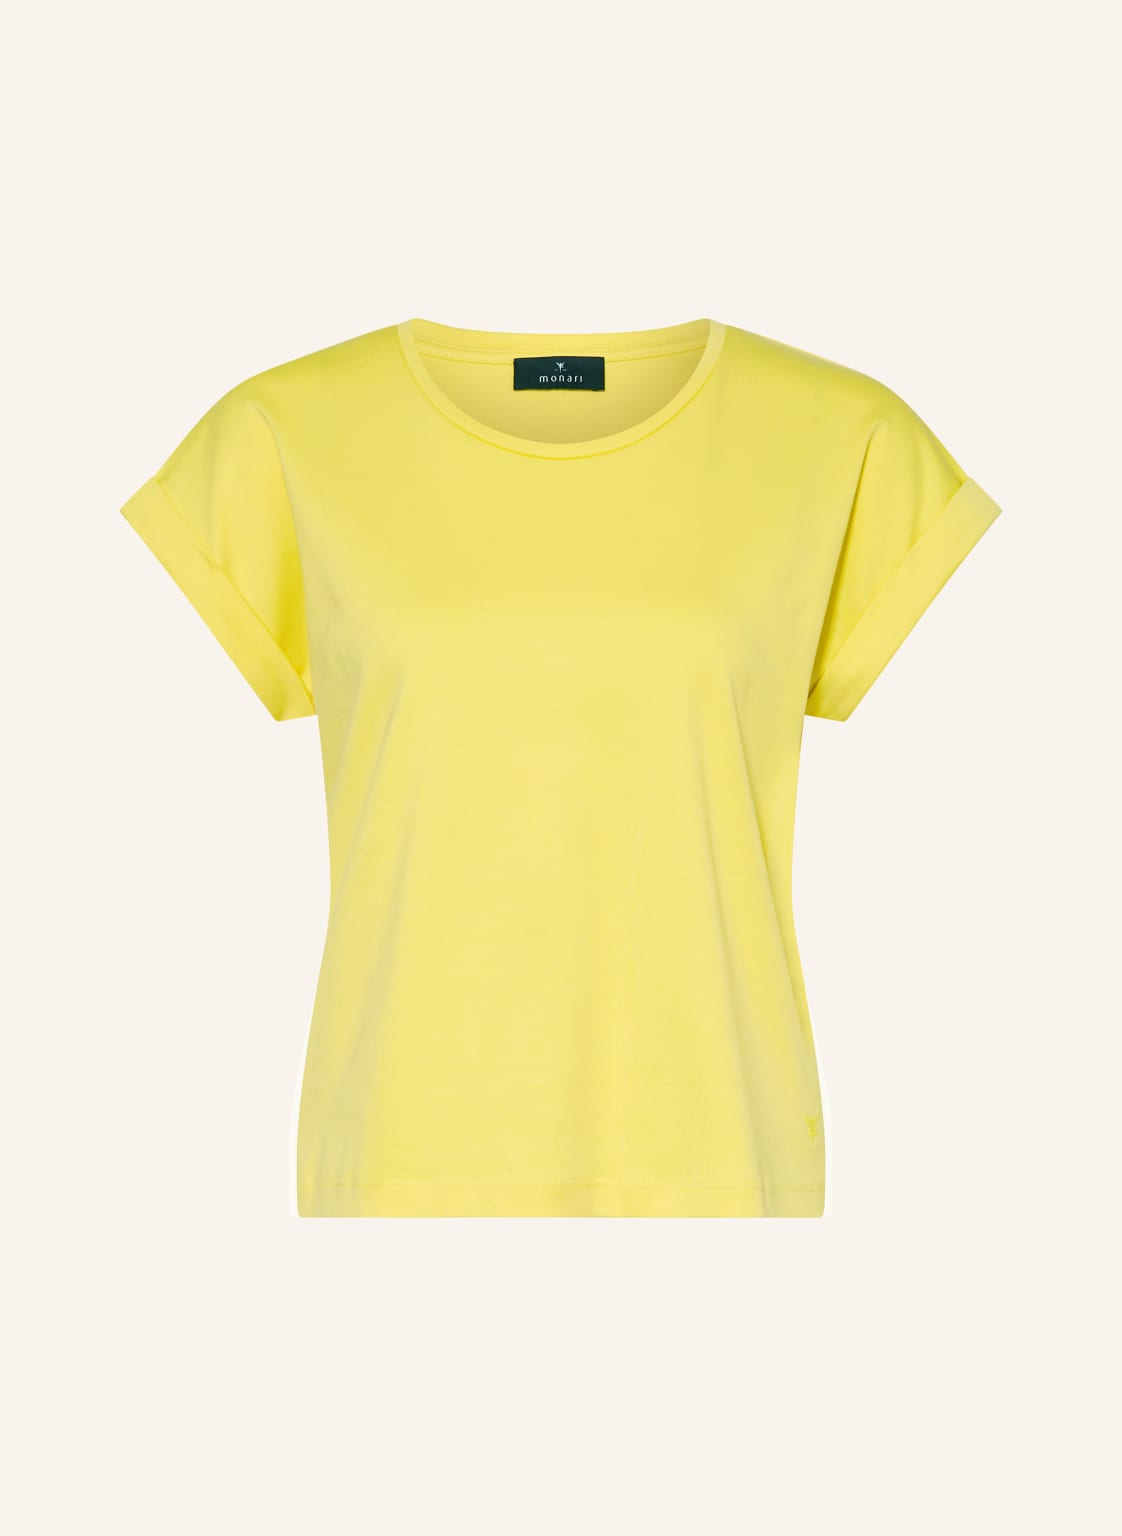 Monari T-Shirt gelb von monari